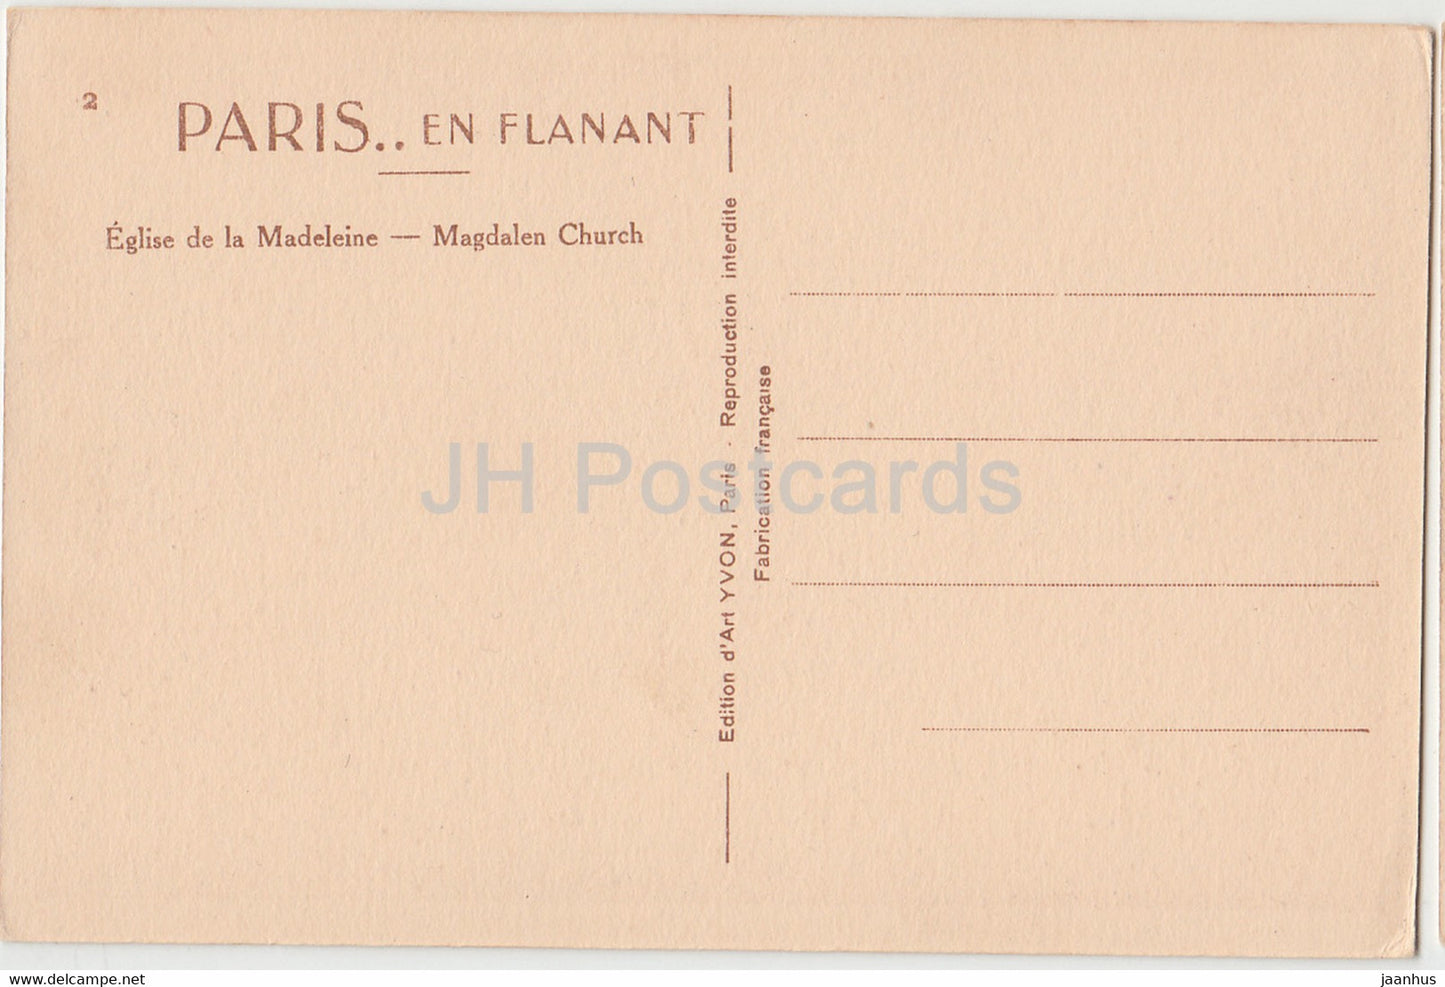 Paris - Eglise de la Madeleine - Magdalenenkirche - altes Auto - alte Postkarte - Frankreich - unbenutzt